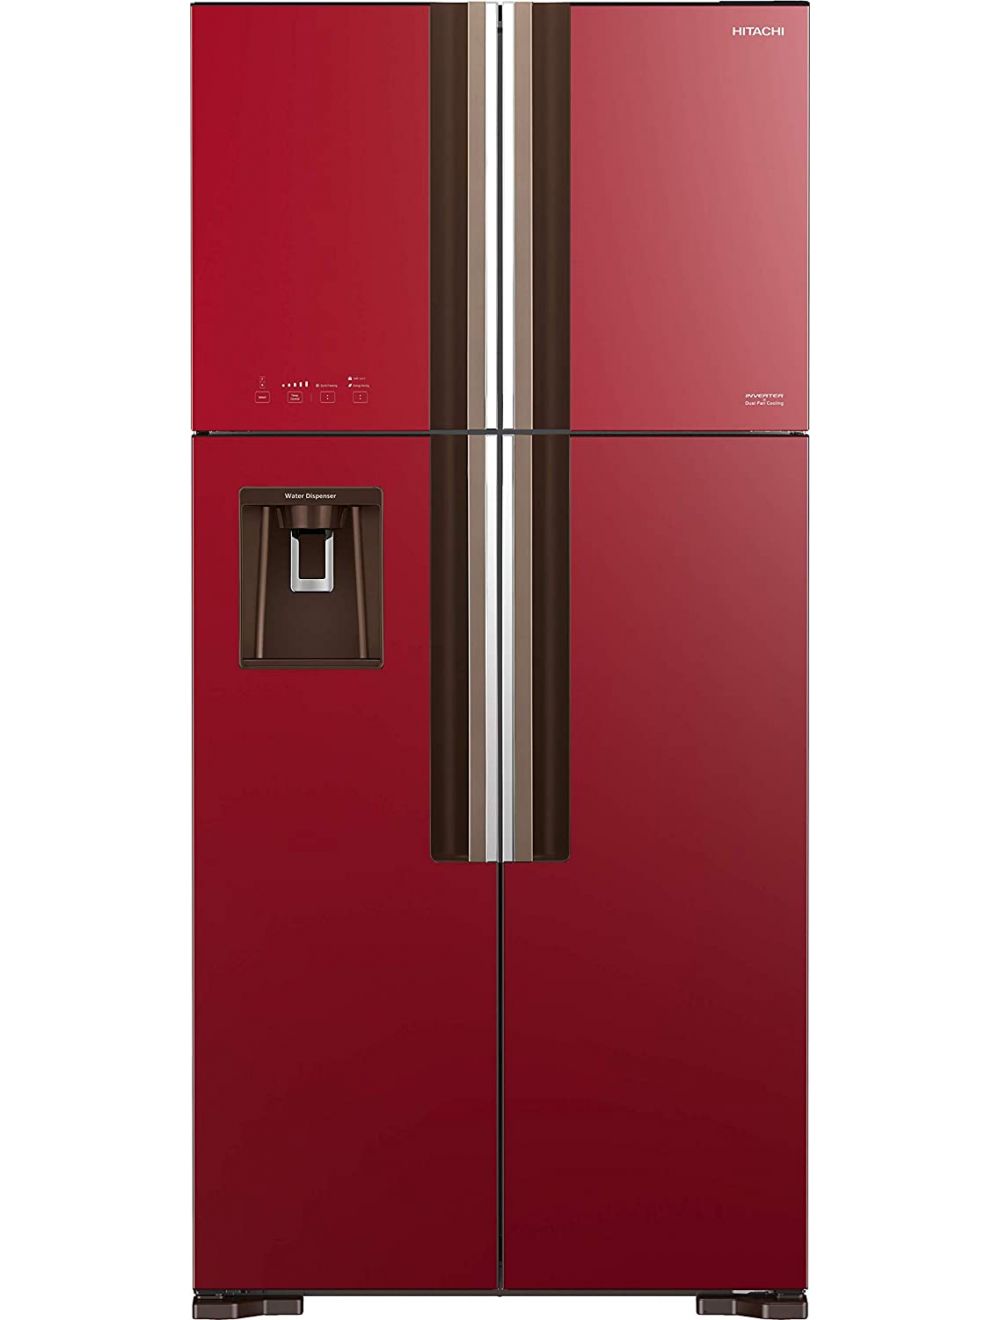 Hitachi, 760L Big French Refrigerator With Inverter-RW760PUK7GRD